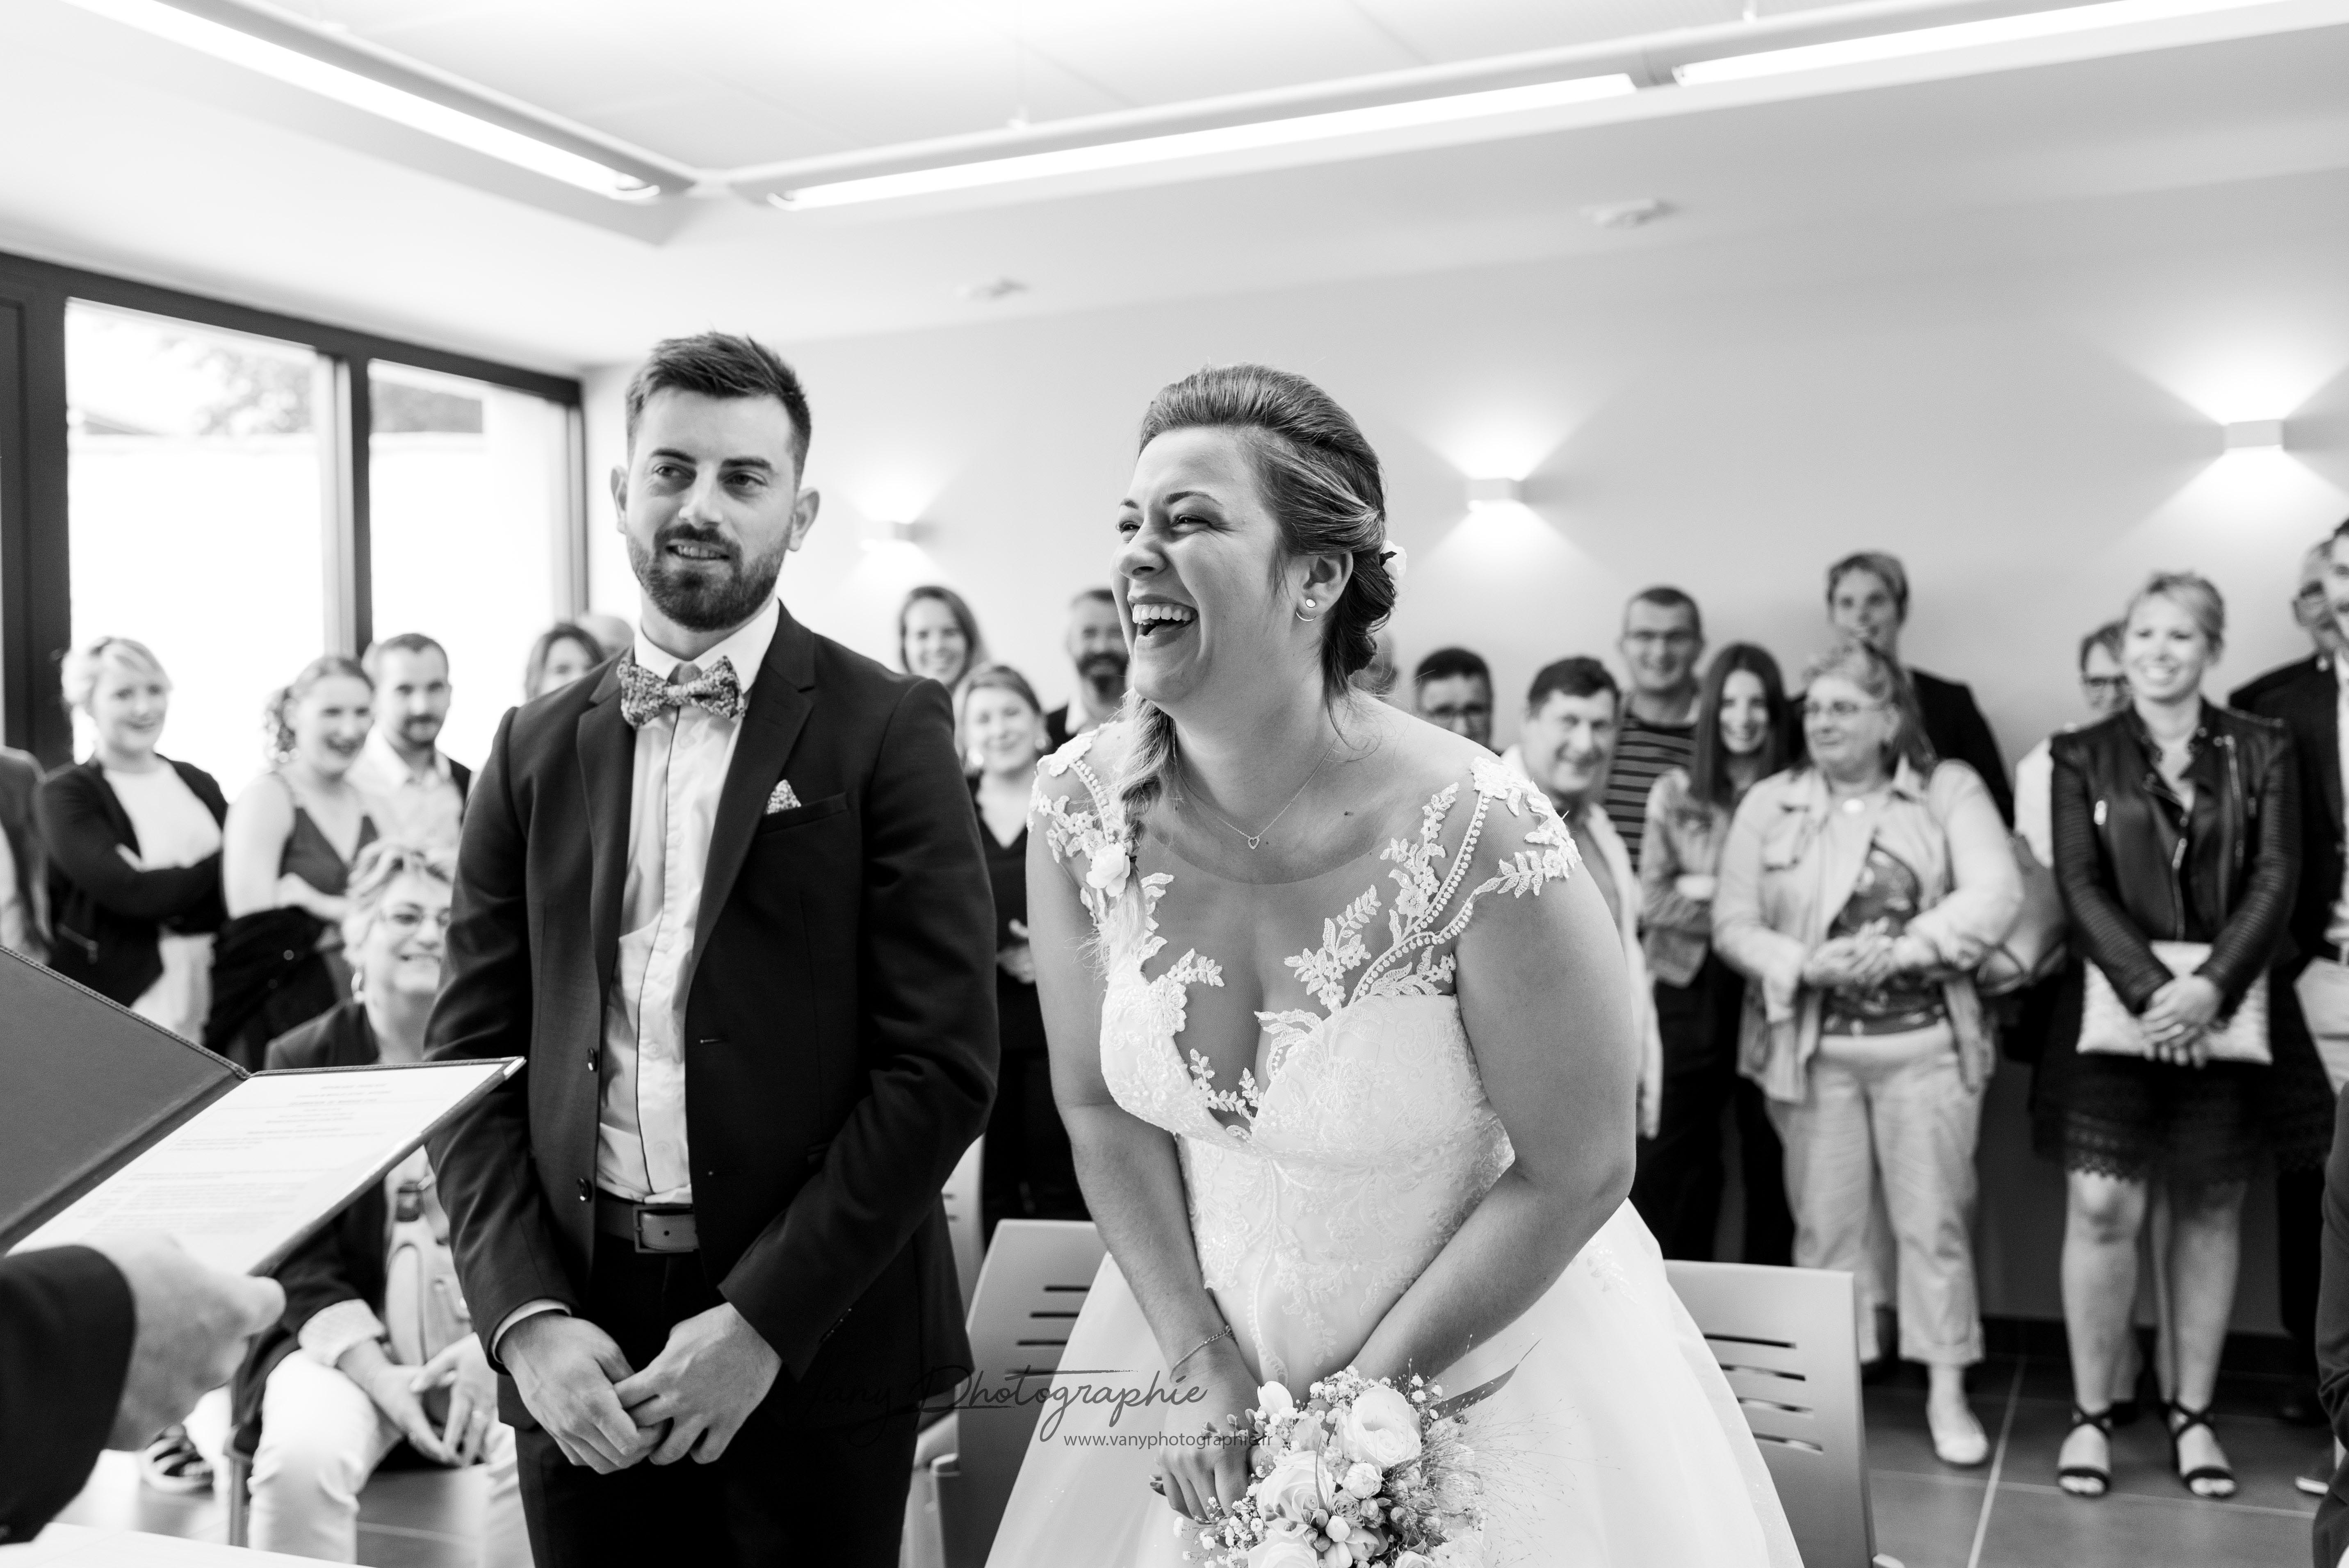 Photographe mariage Evron